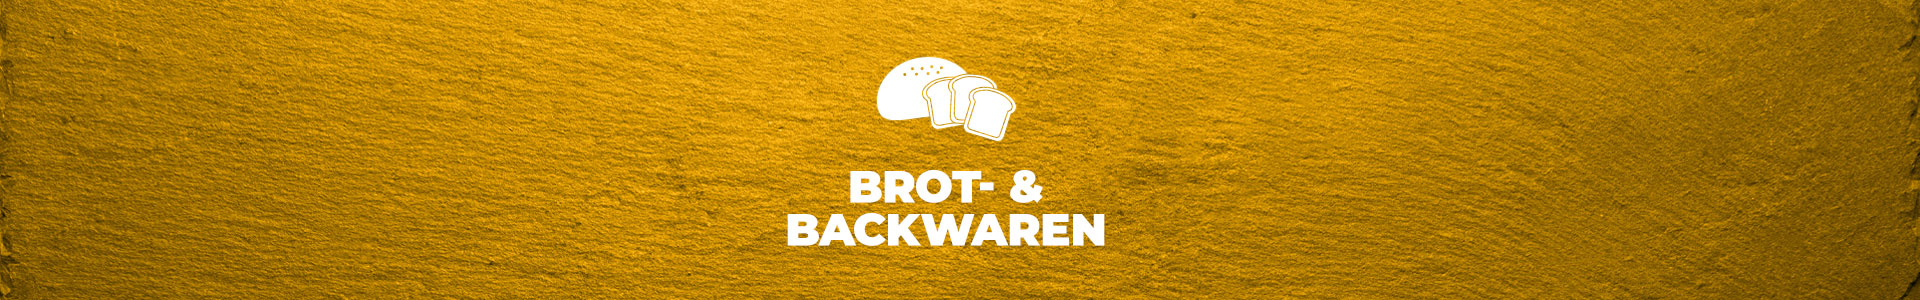 Brot- & Backwaren